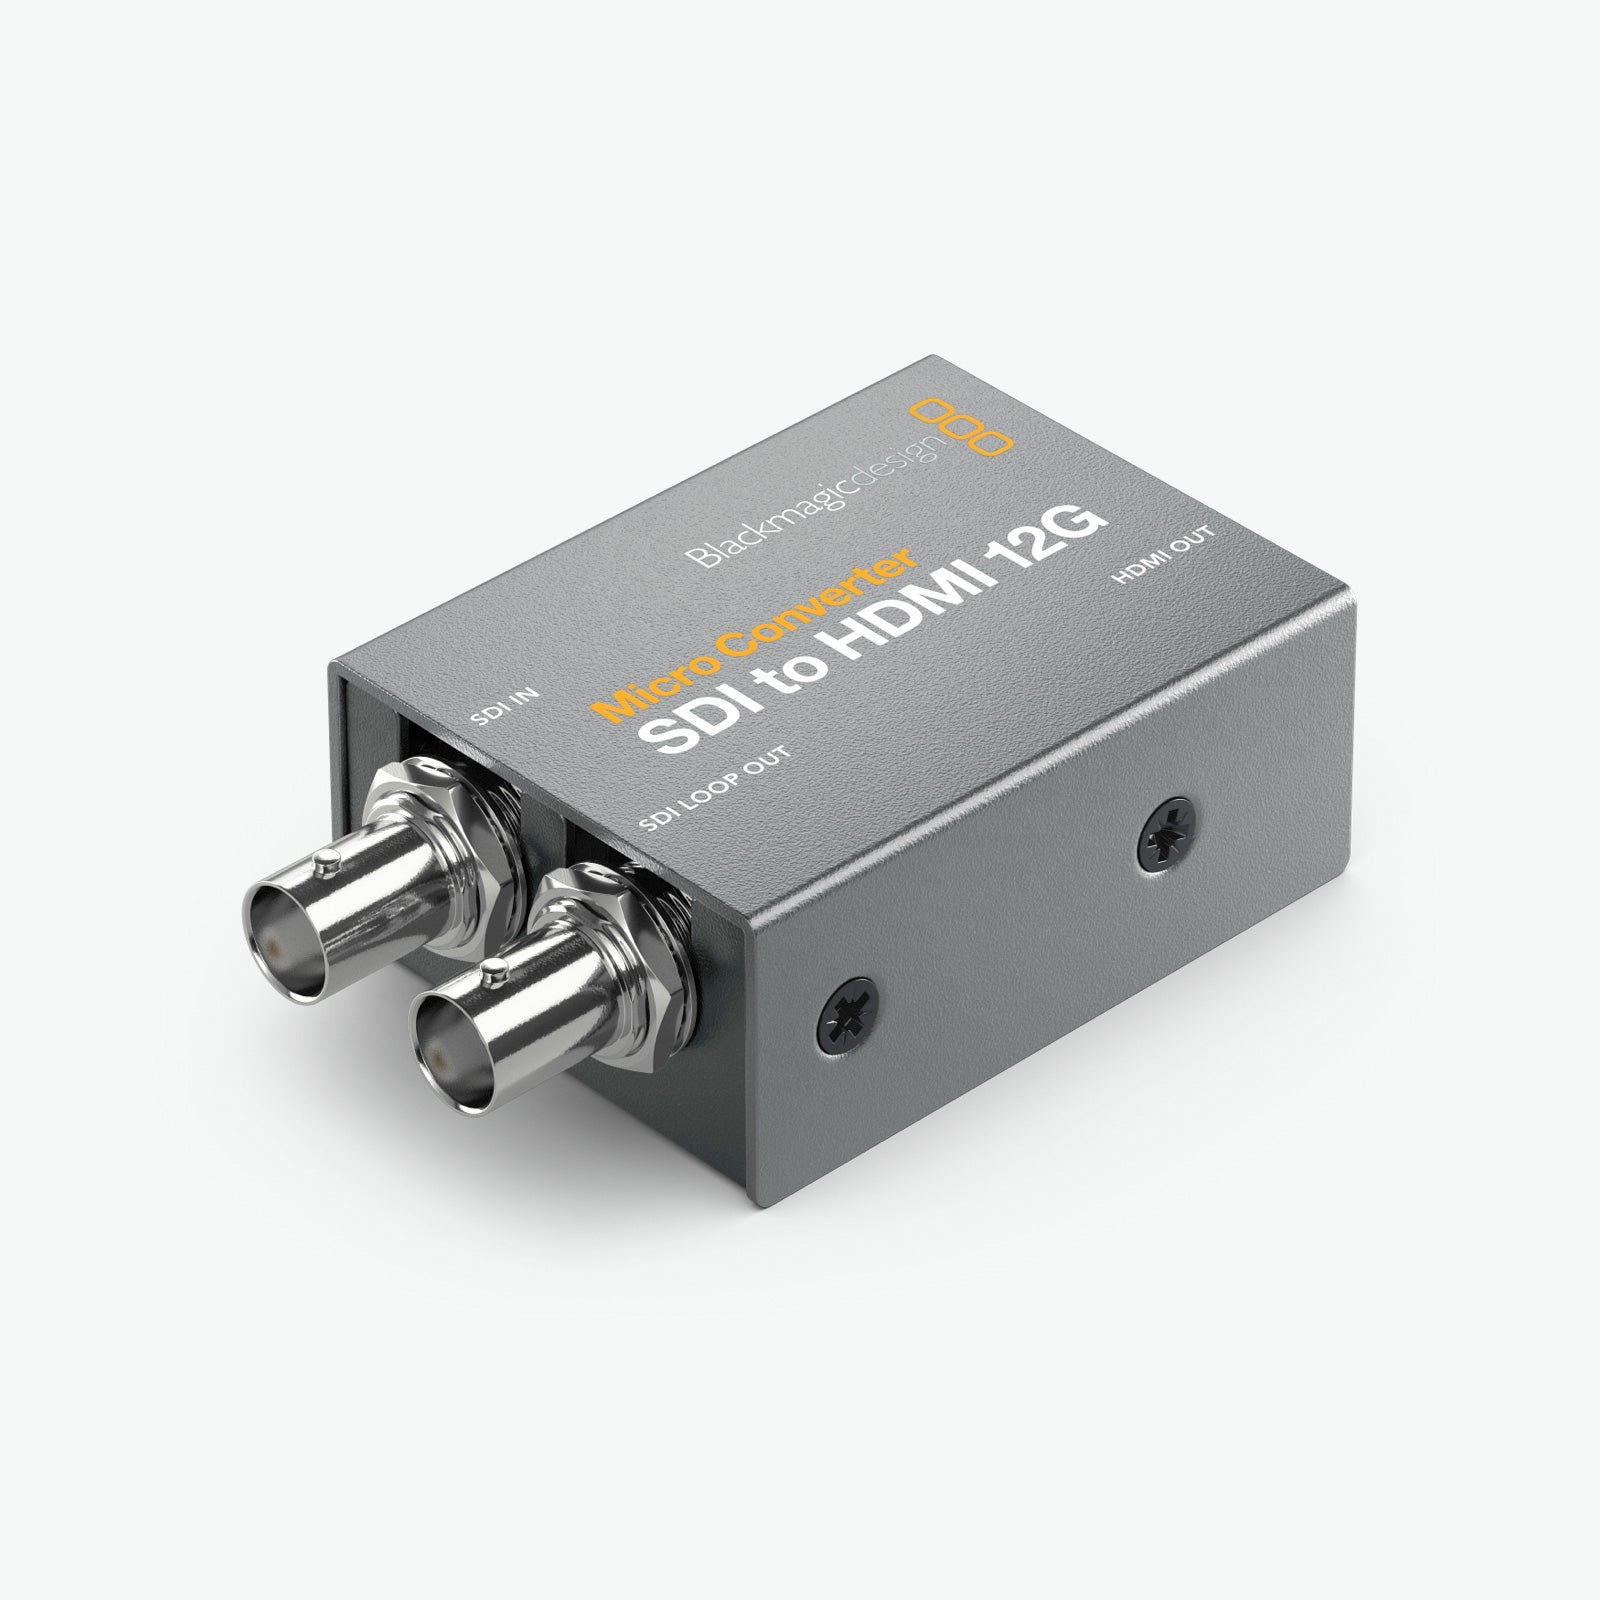 Blackmagic Design(ブラックマジックデザイン) Micro Converter SDI to HDMI 12G CONVCMIC/SH12G